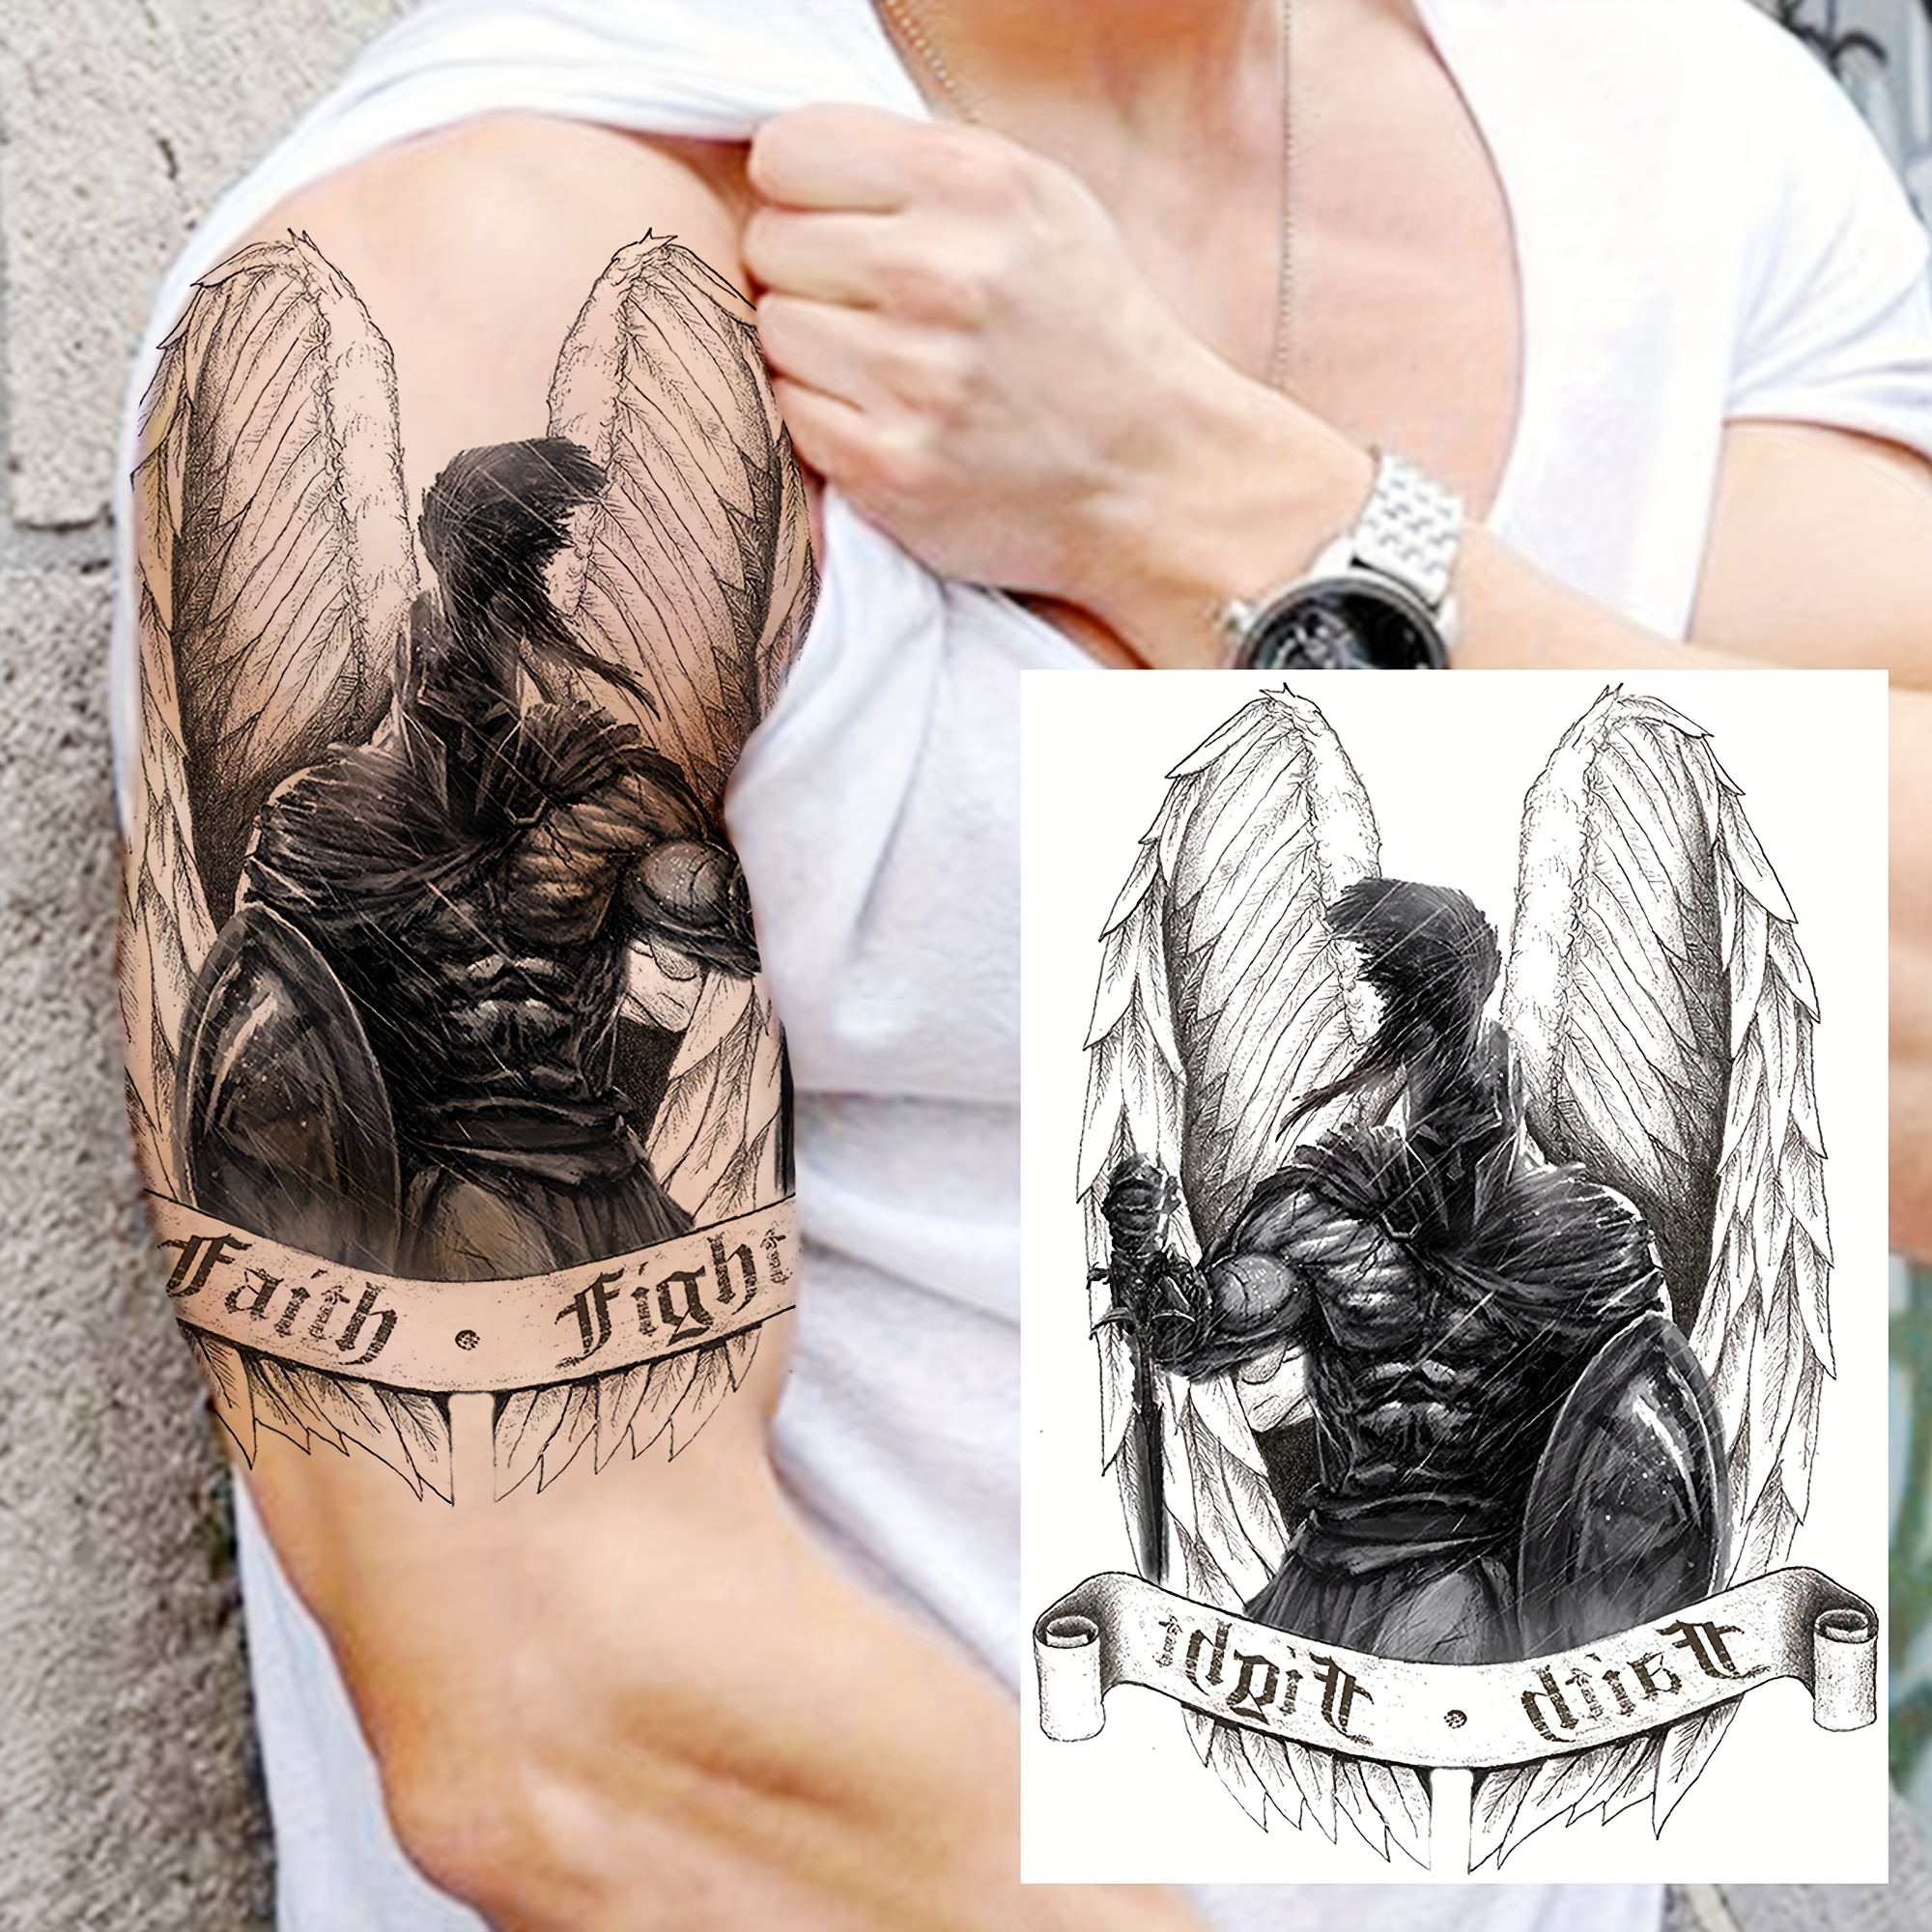  Fake Totem Sleeve Tattoos Stickers 6-Sheet Full Arm